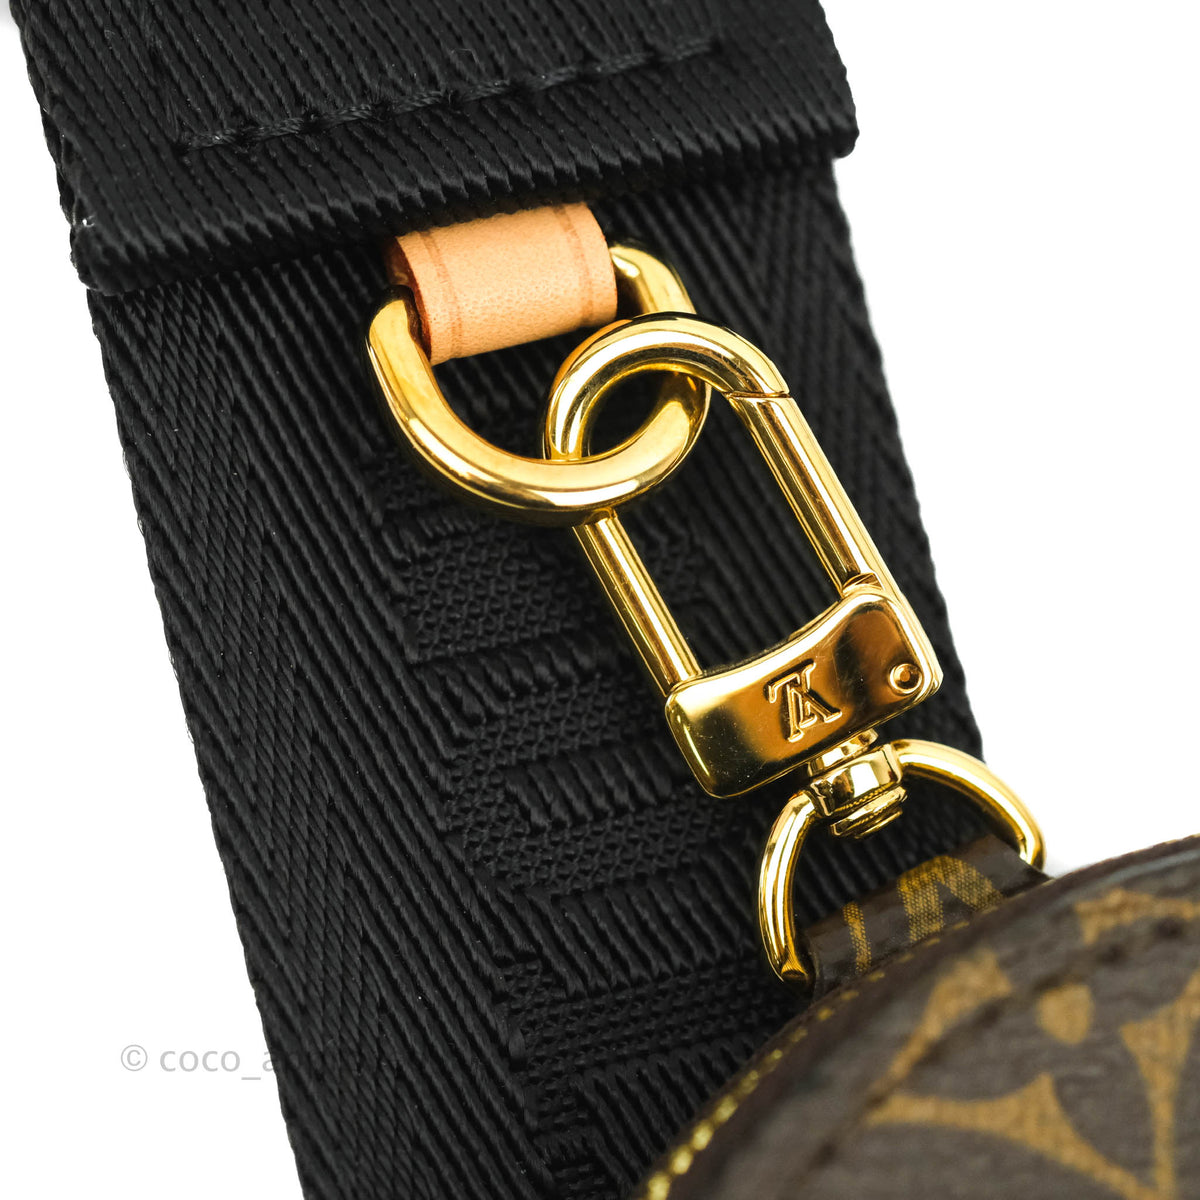 Black Louis Vuitton Nylon Strap with Monogram Round Coin Purse, AmaflightschoolShops Revival